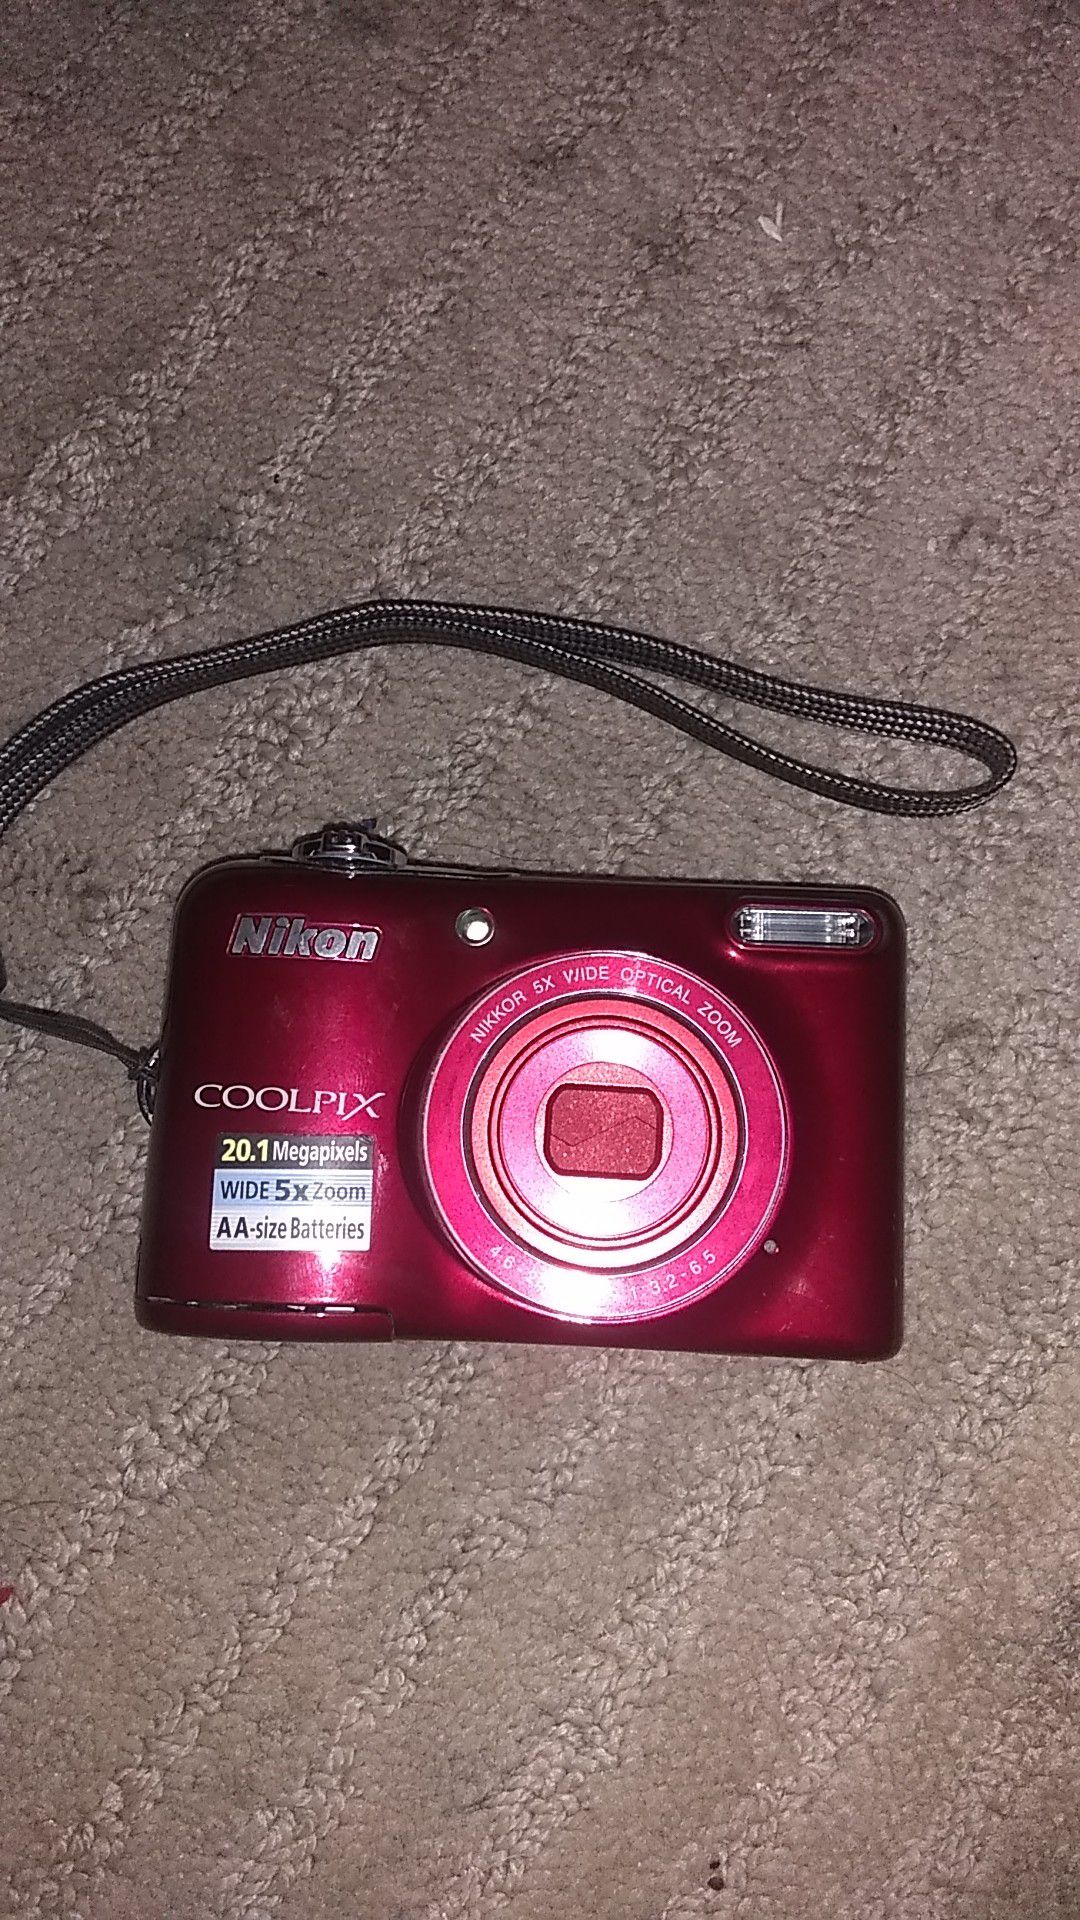 NIKON Coolpix 20.1 megapixel digital camera (Like New) $25Obo